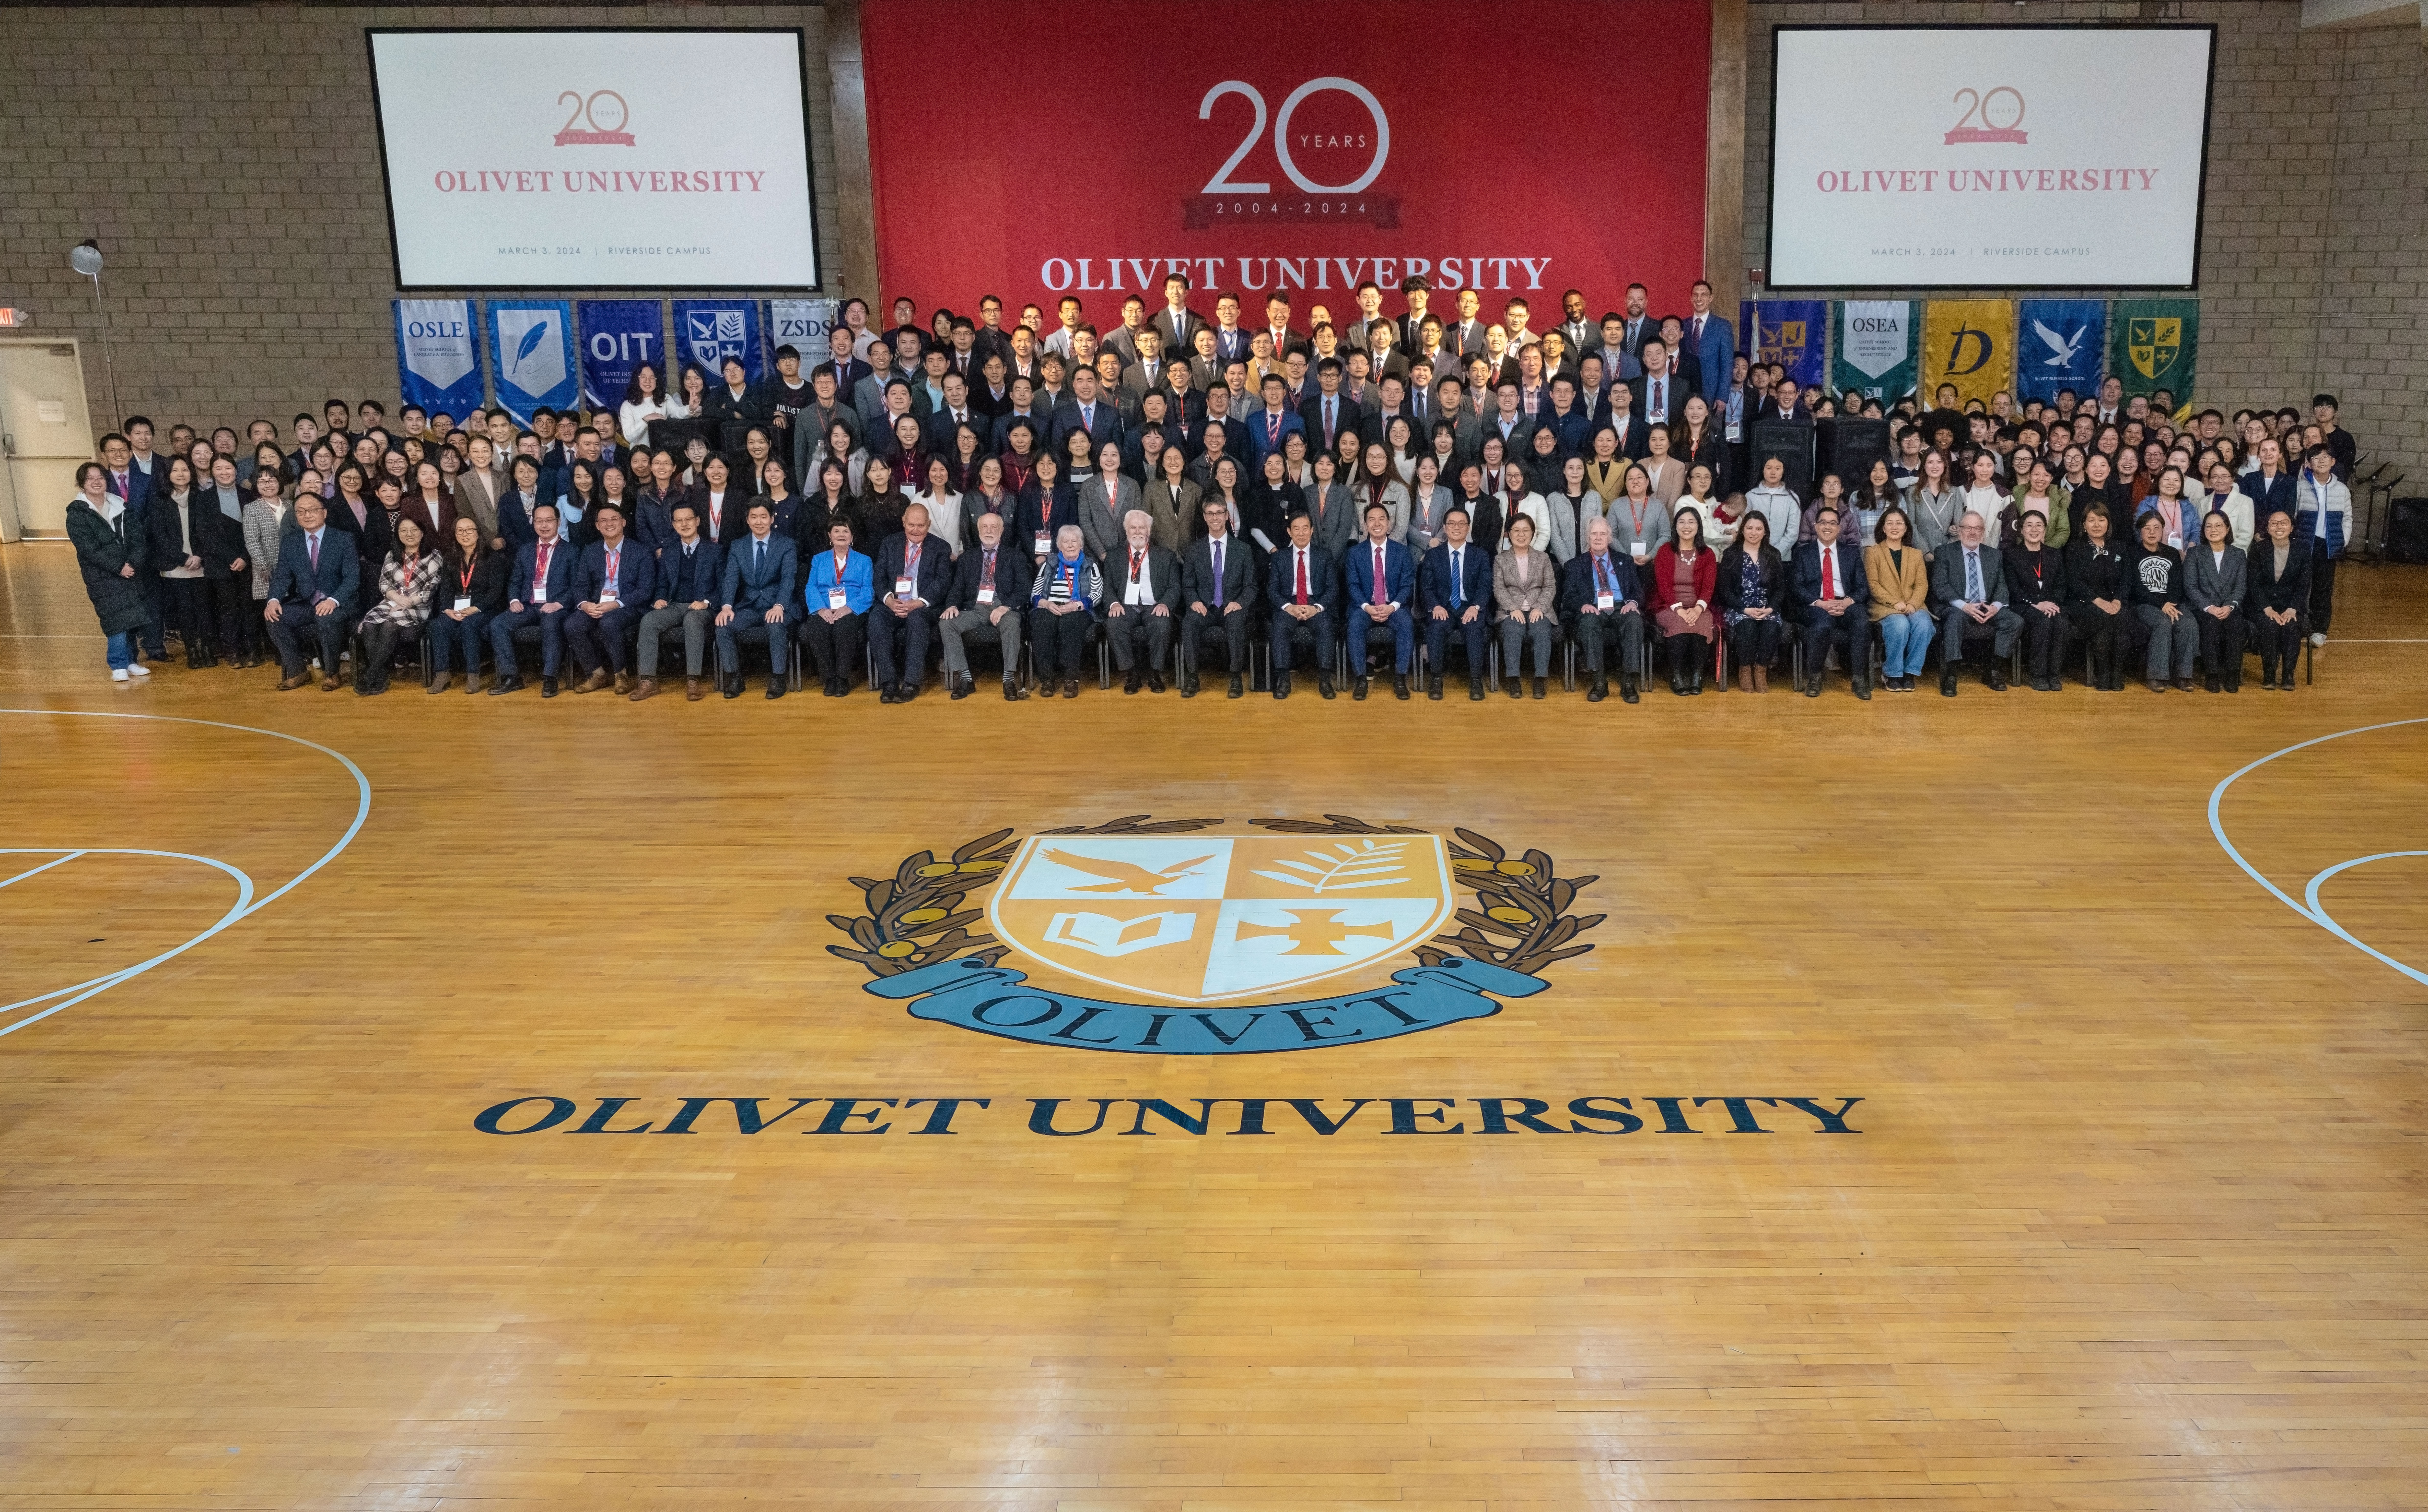 Olivet University Marks 20th Anniversary Milestone with Reverence and Gratitude